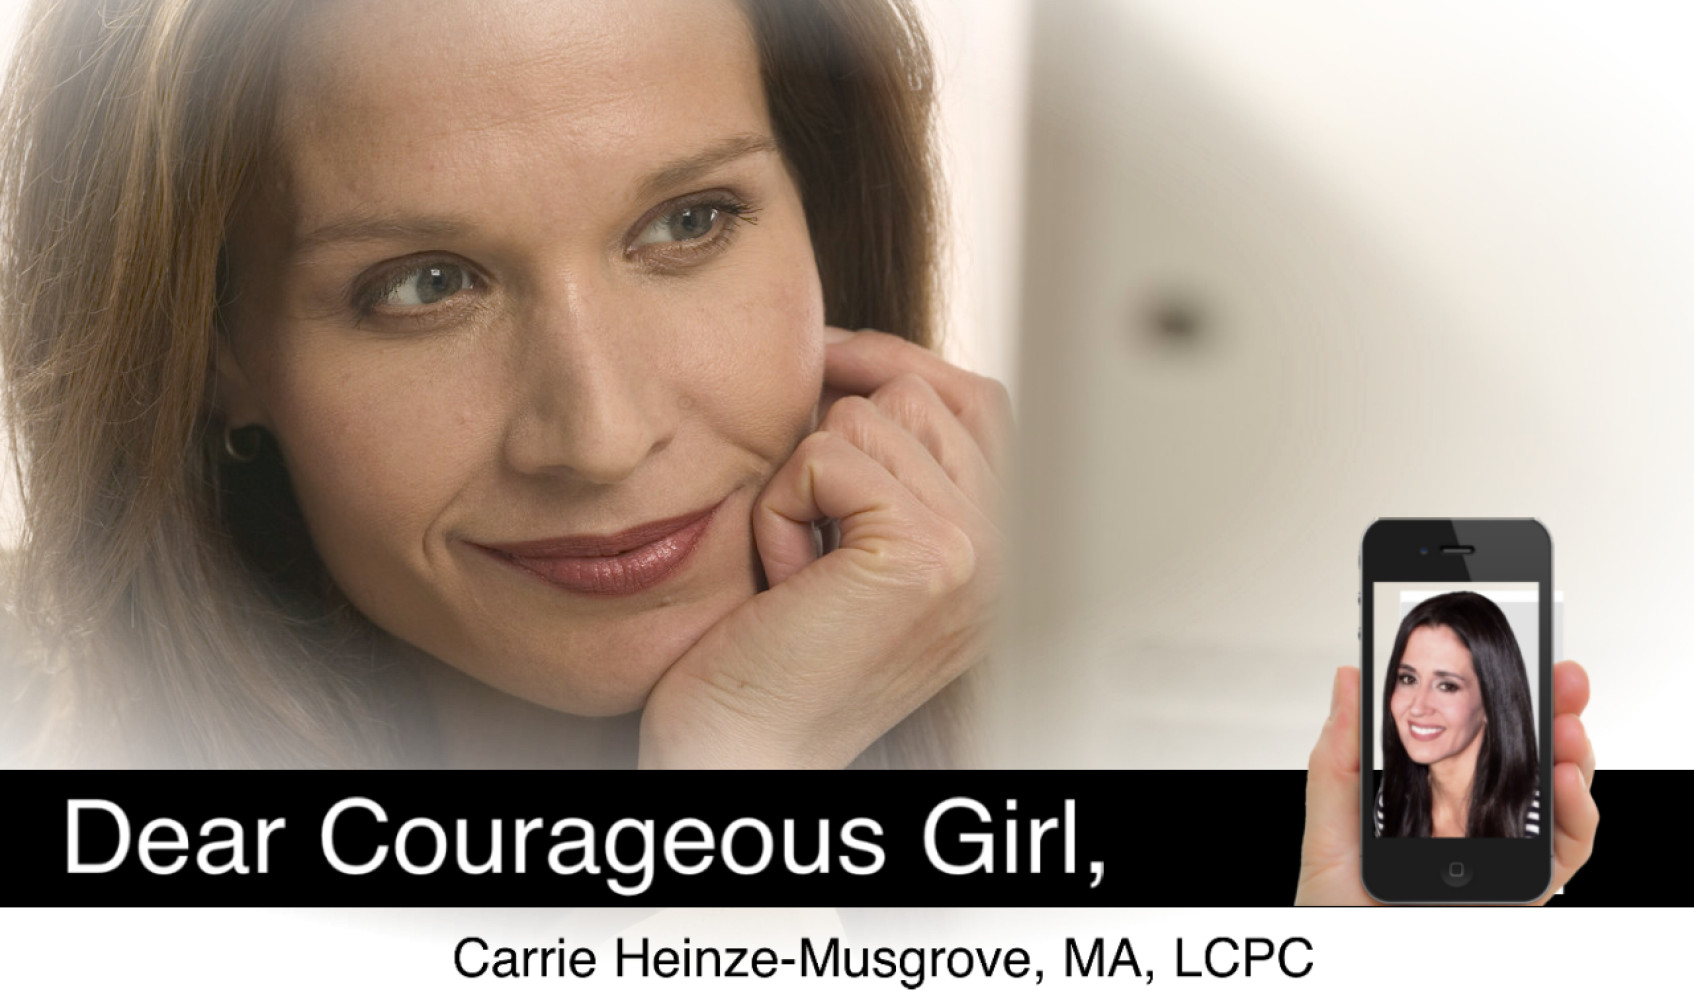 Dear Courageous Girl,